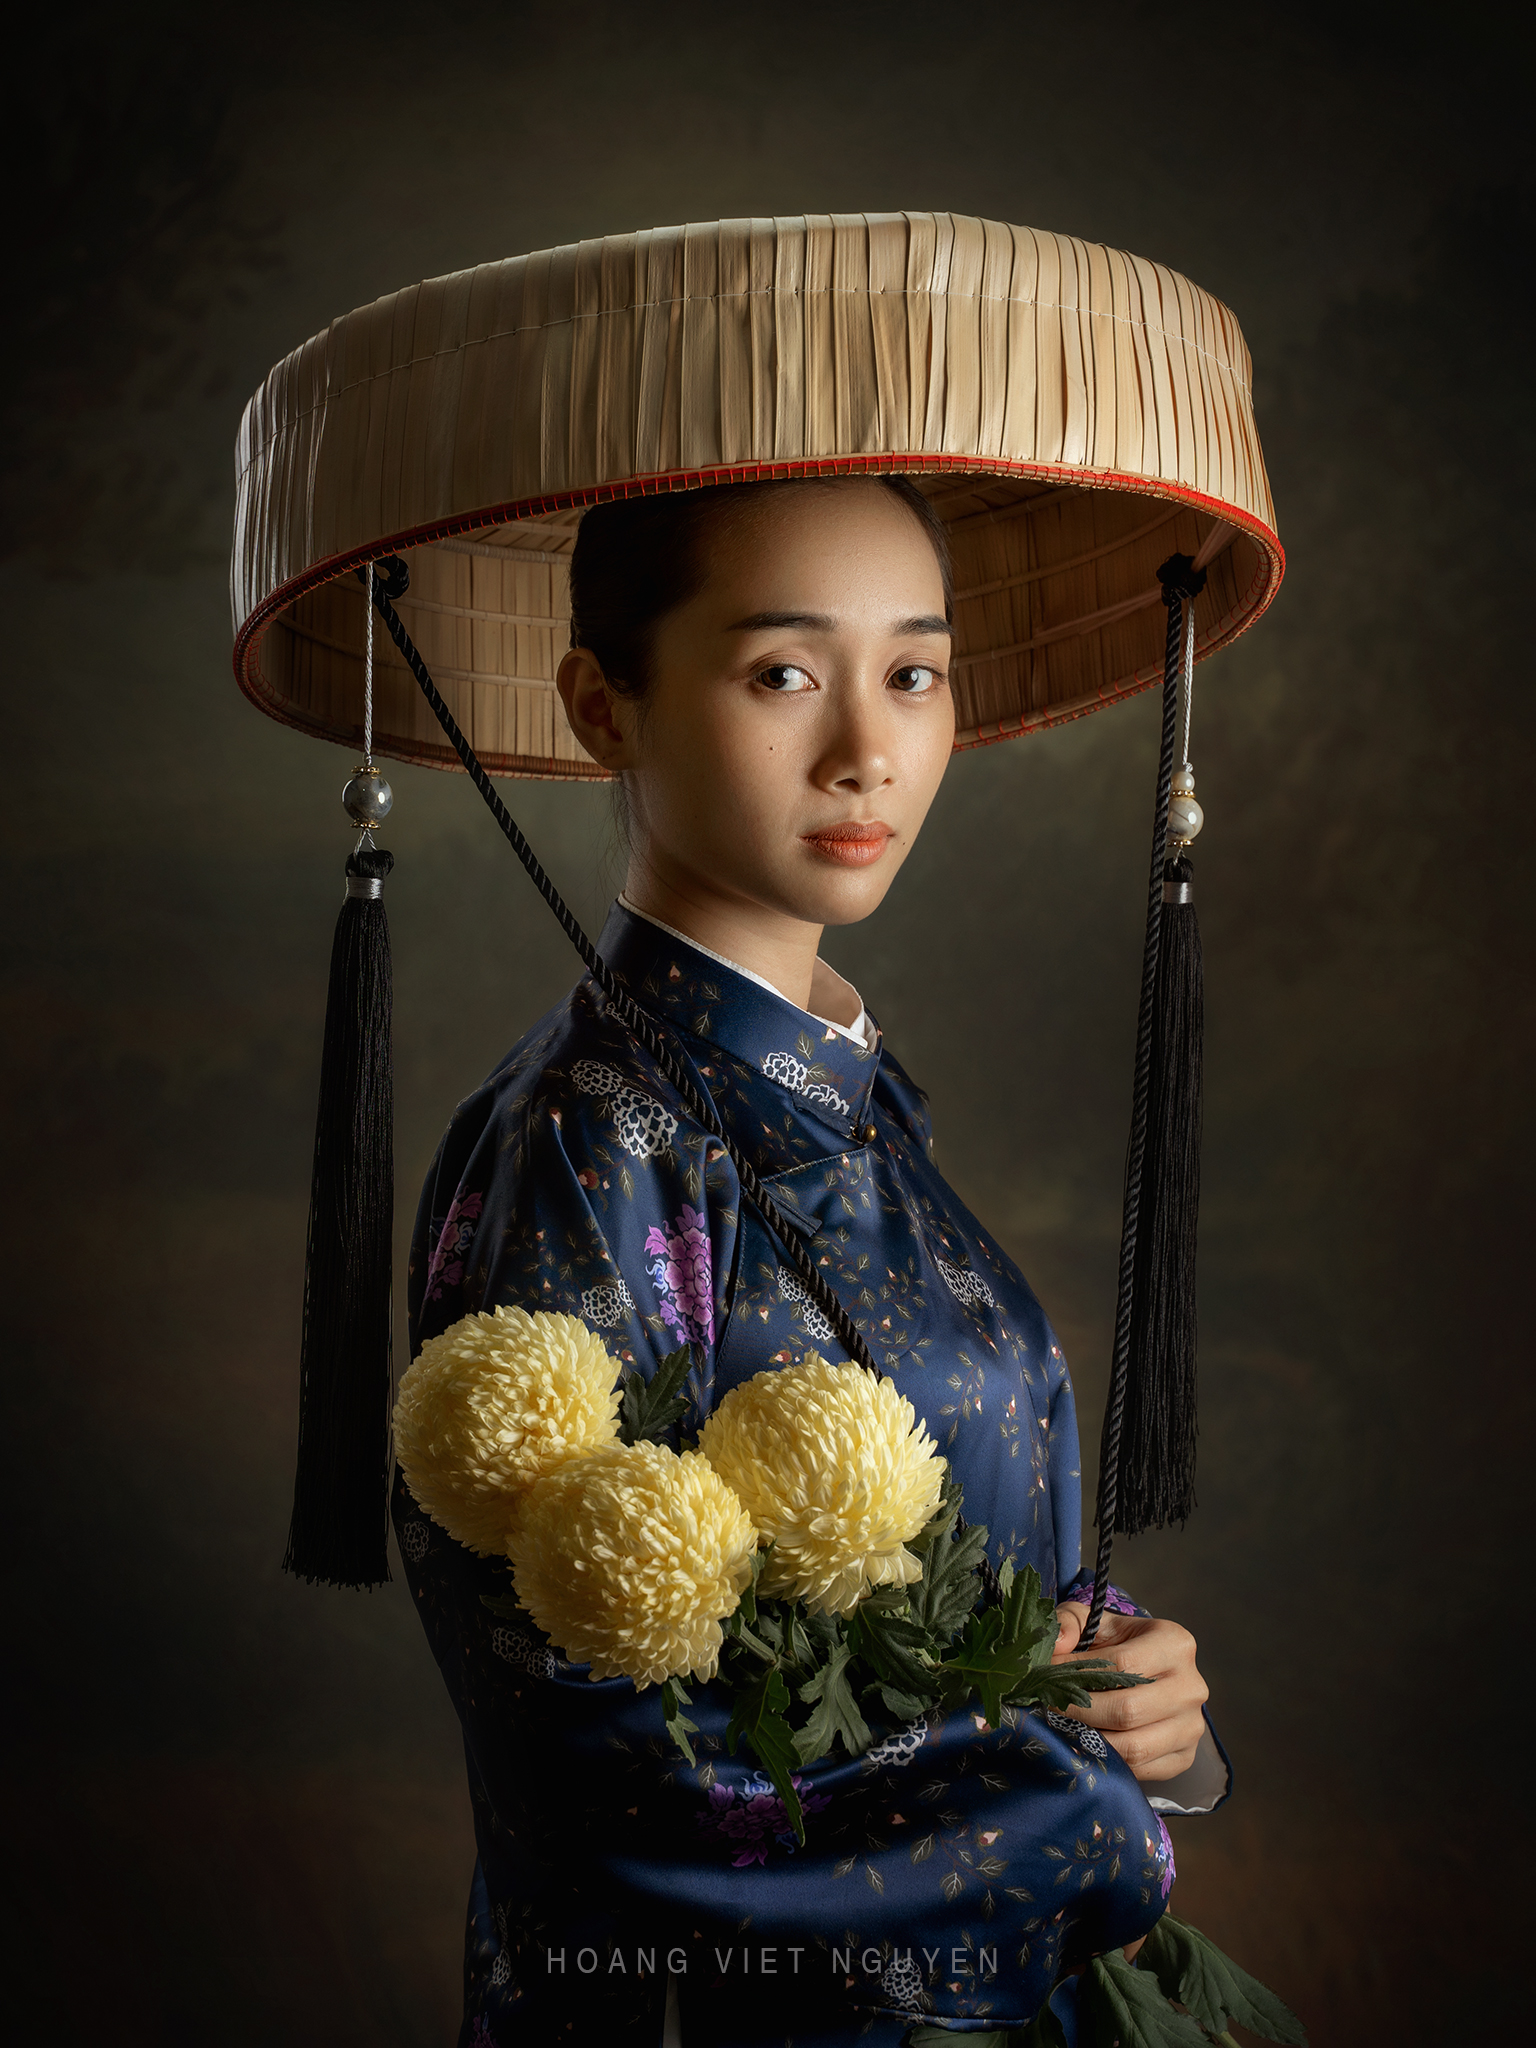 Hoang Nguyen Women Asian Hat Flowers Dress Simple Background Portrait Studio 1536x2048